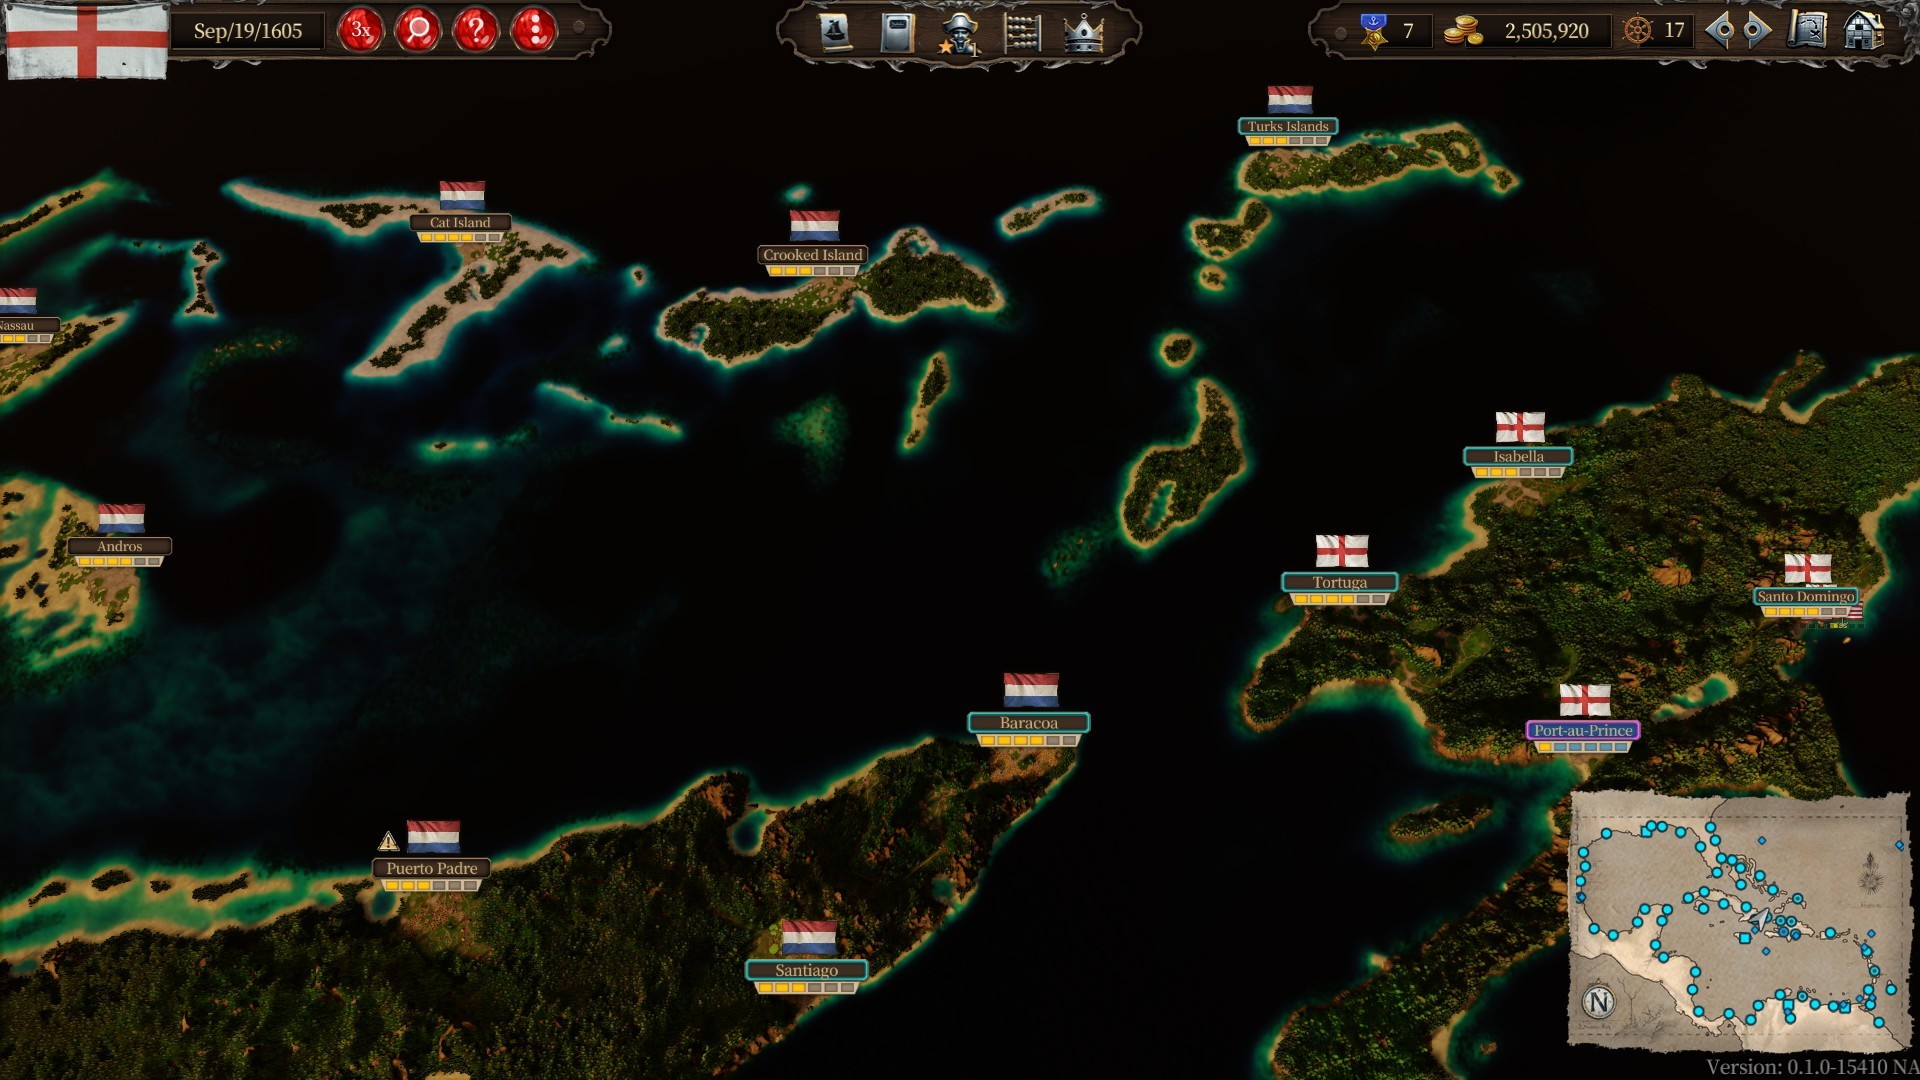 Port Royale 4 - screenshot 1